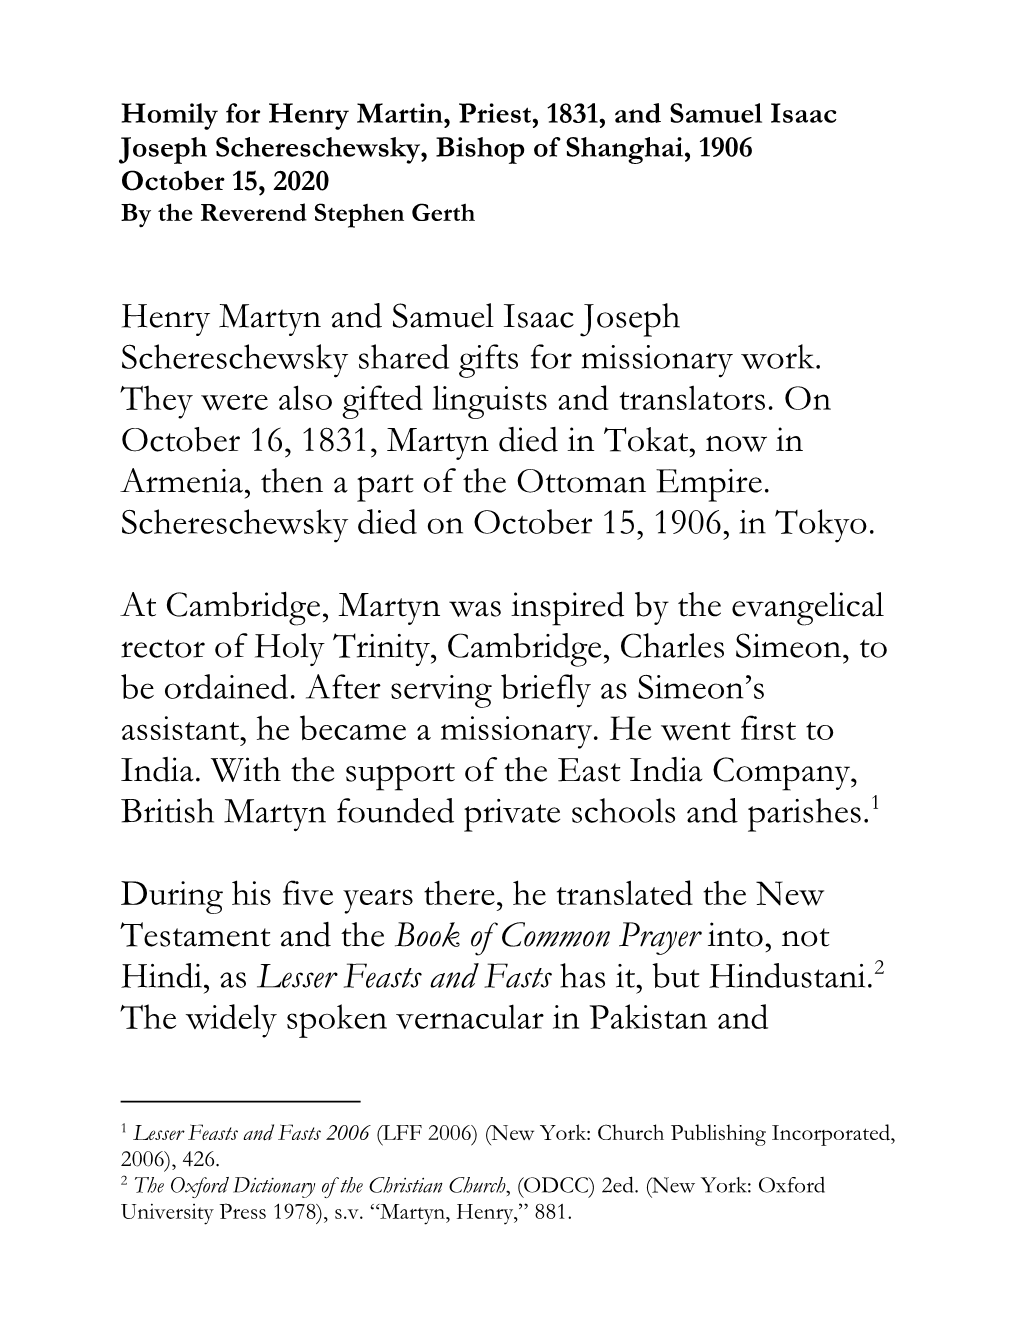 Henry Martyn and Samuel Isaac Joseph Schereschewsky Shared Gifts for Missionary Work